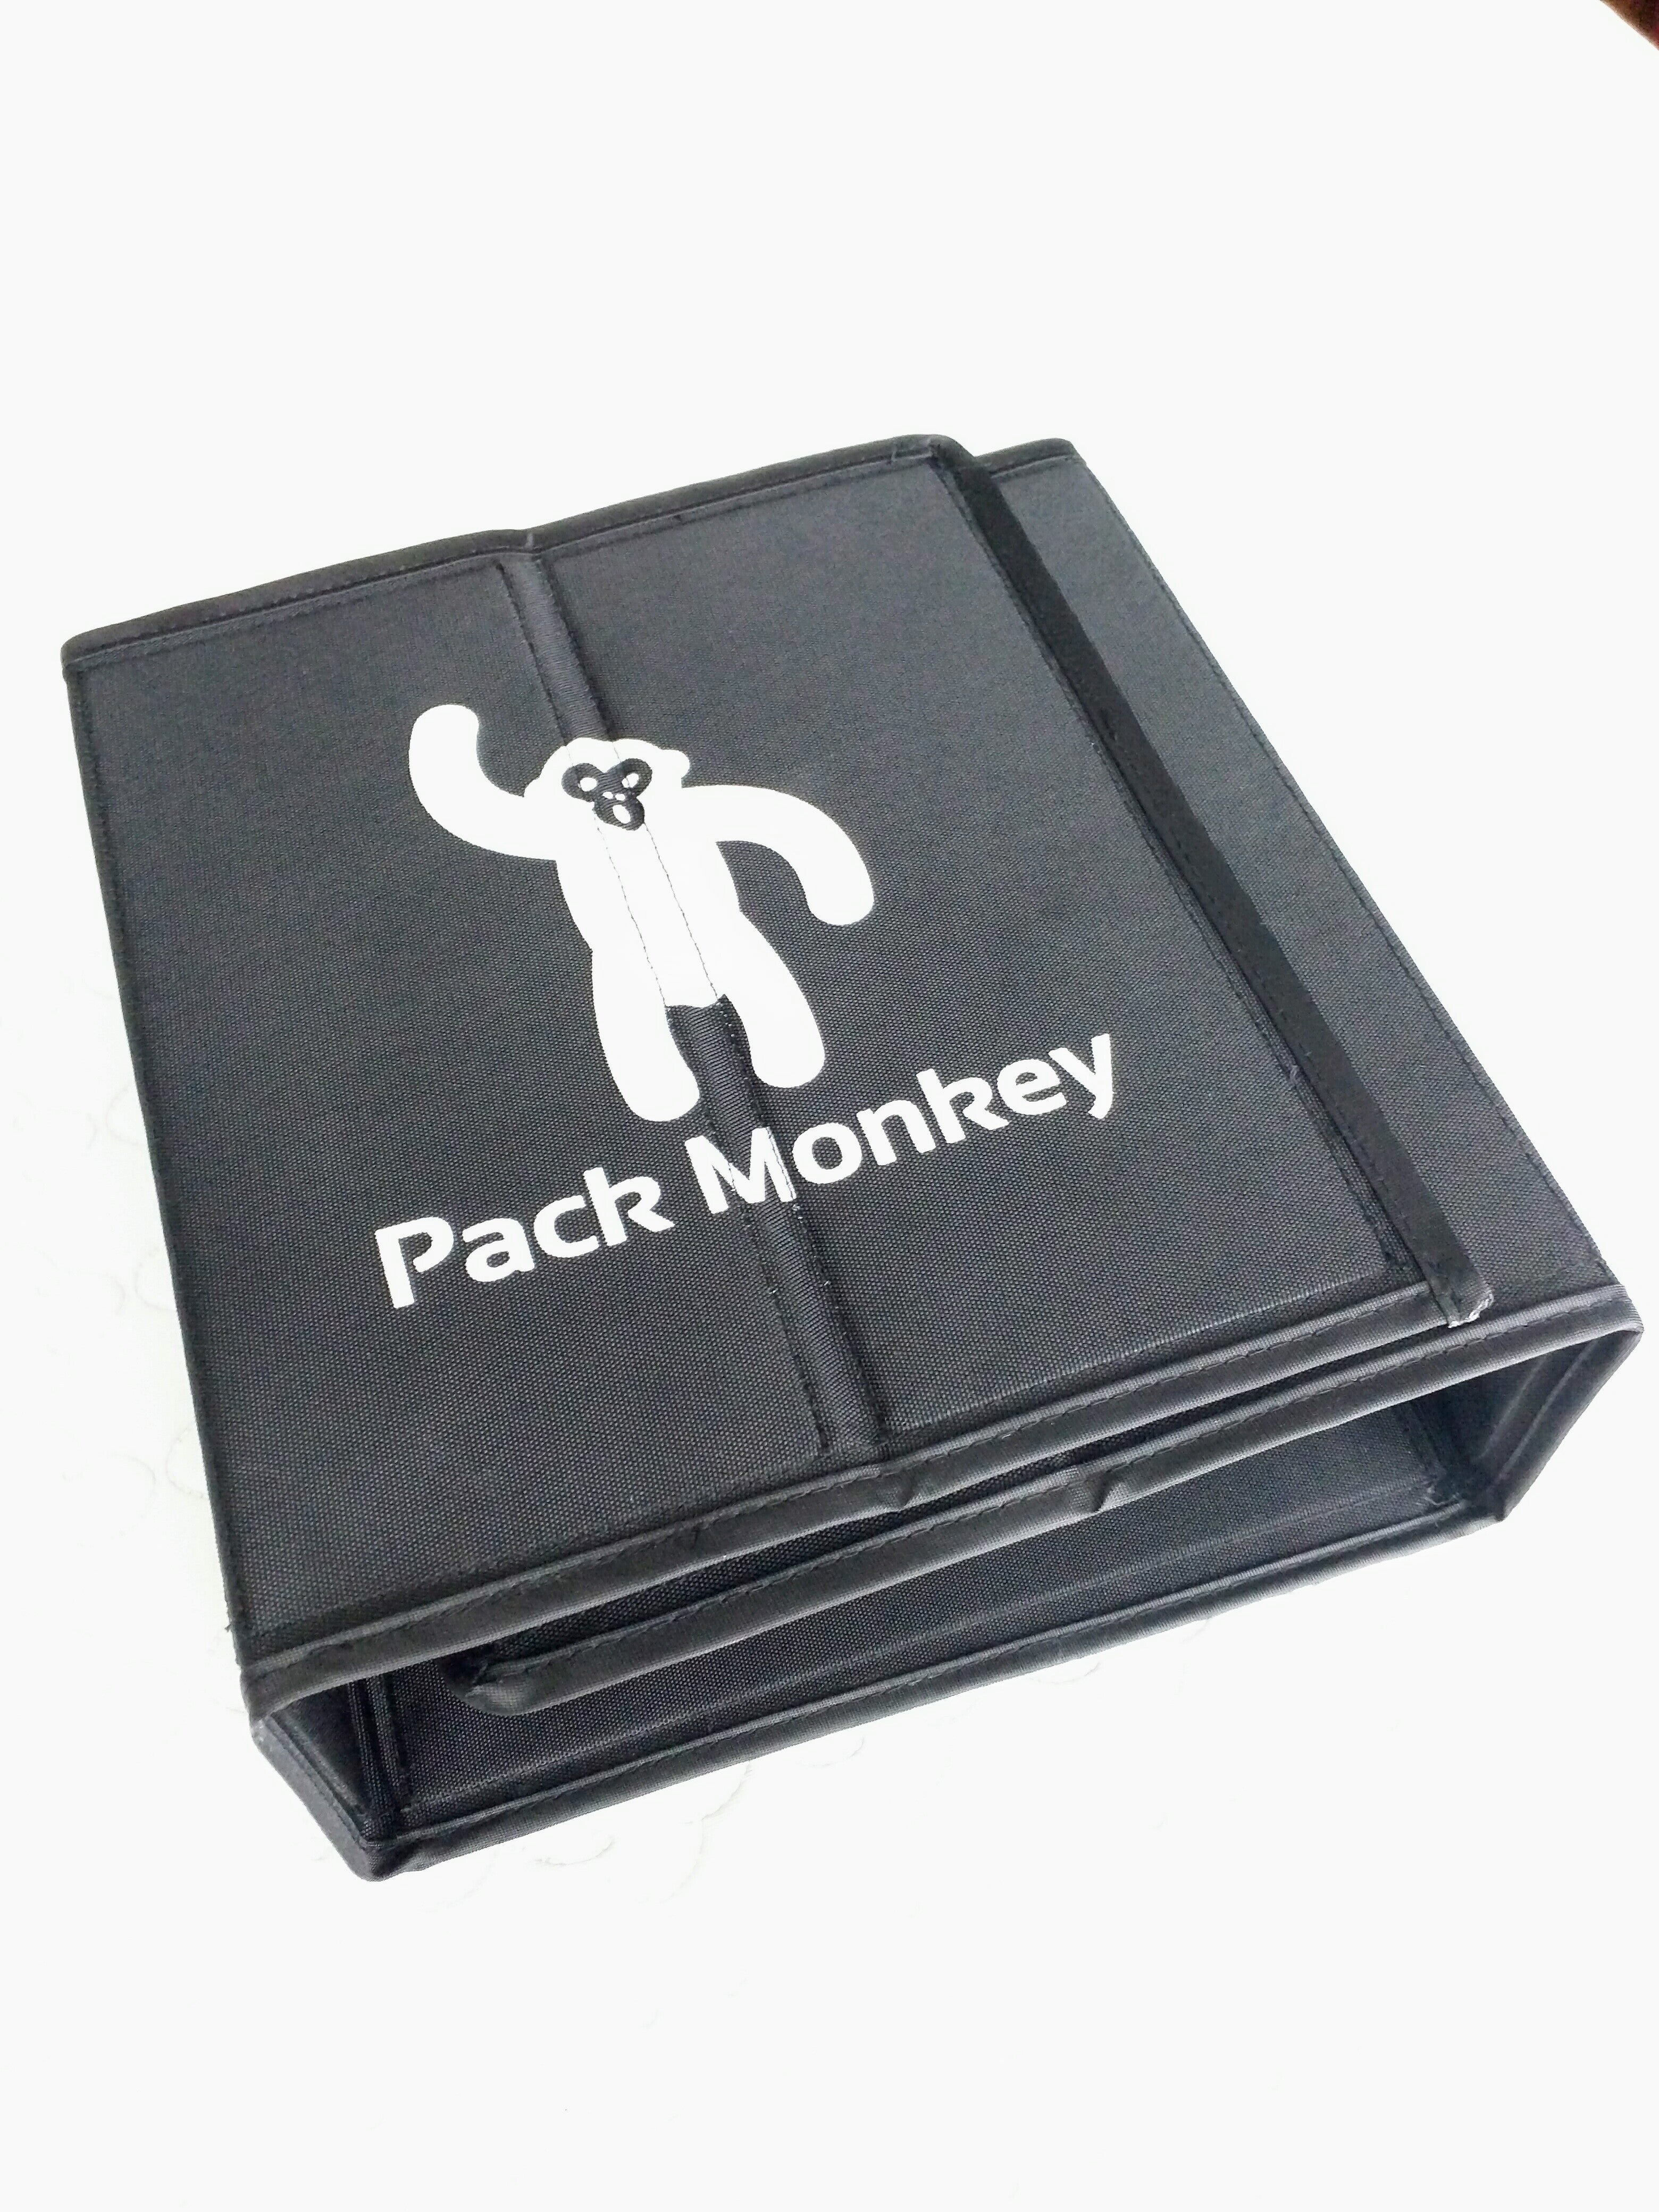 Pack Monkey skydiving packing tool img1